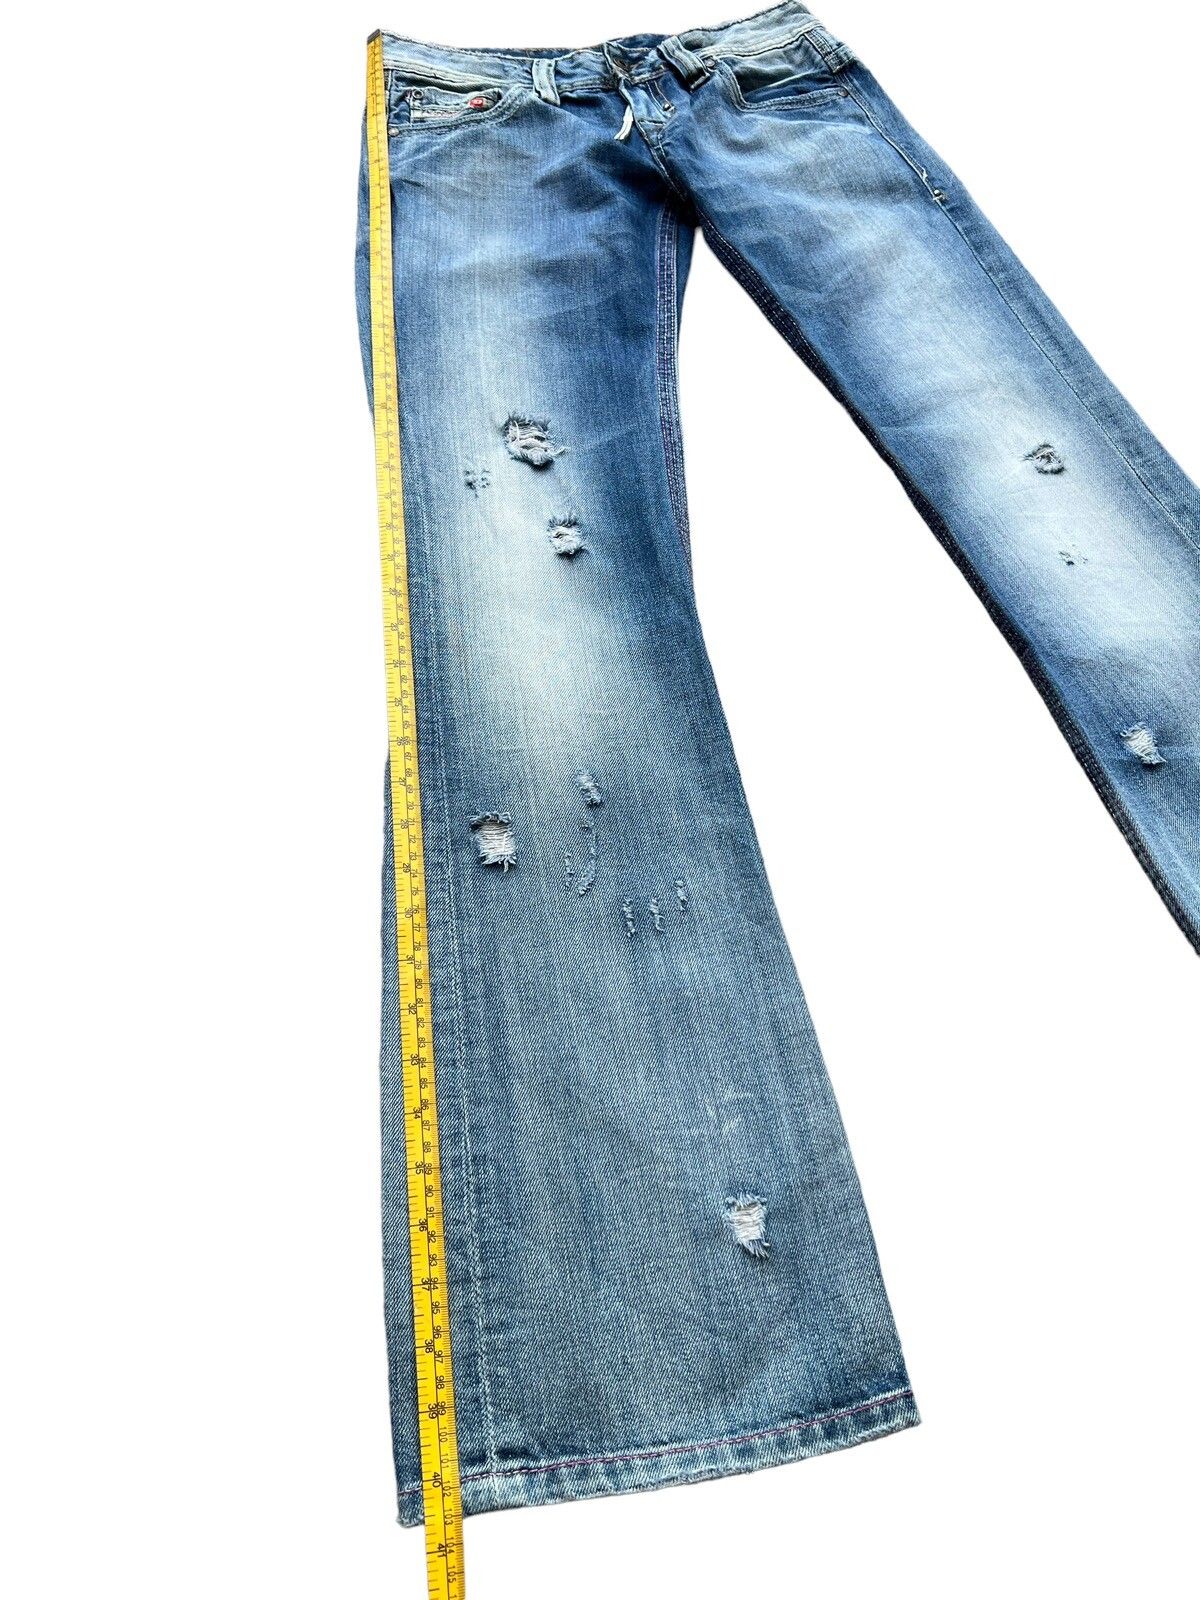 Vintage Diesel Leather Distressed Flare Lowrise Jeans 30x33 - 10